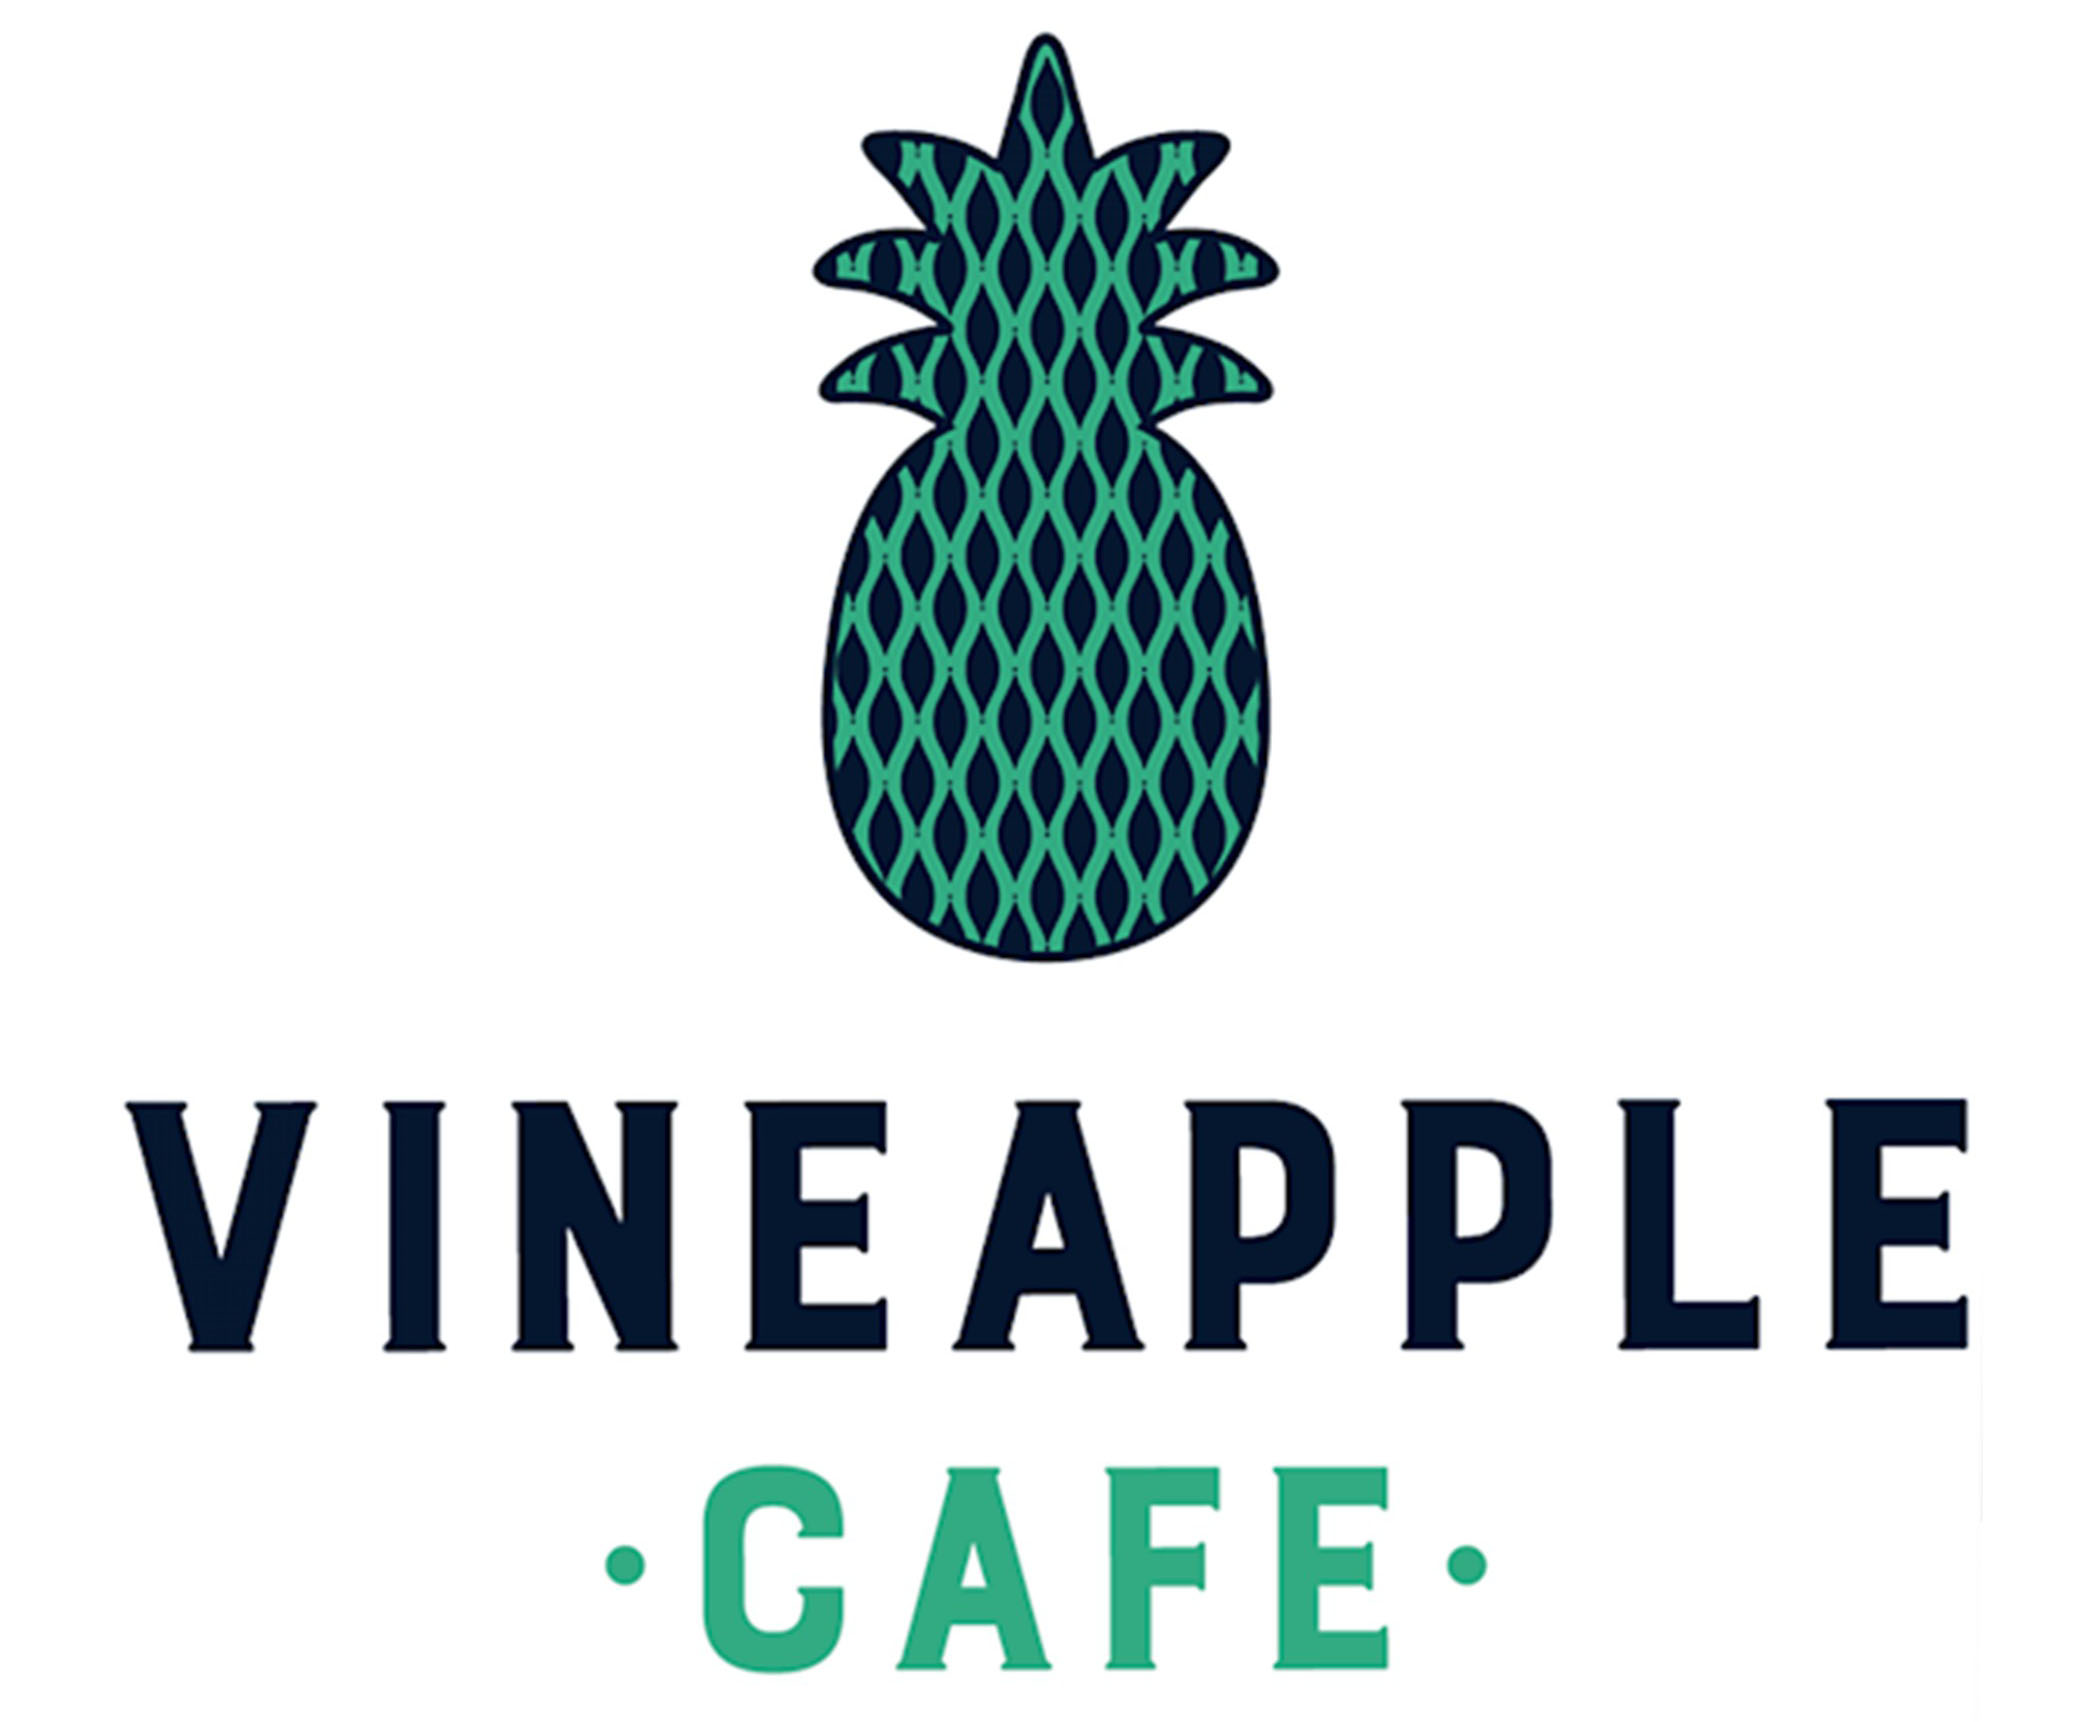 Vineapple Cafe